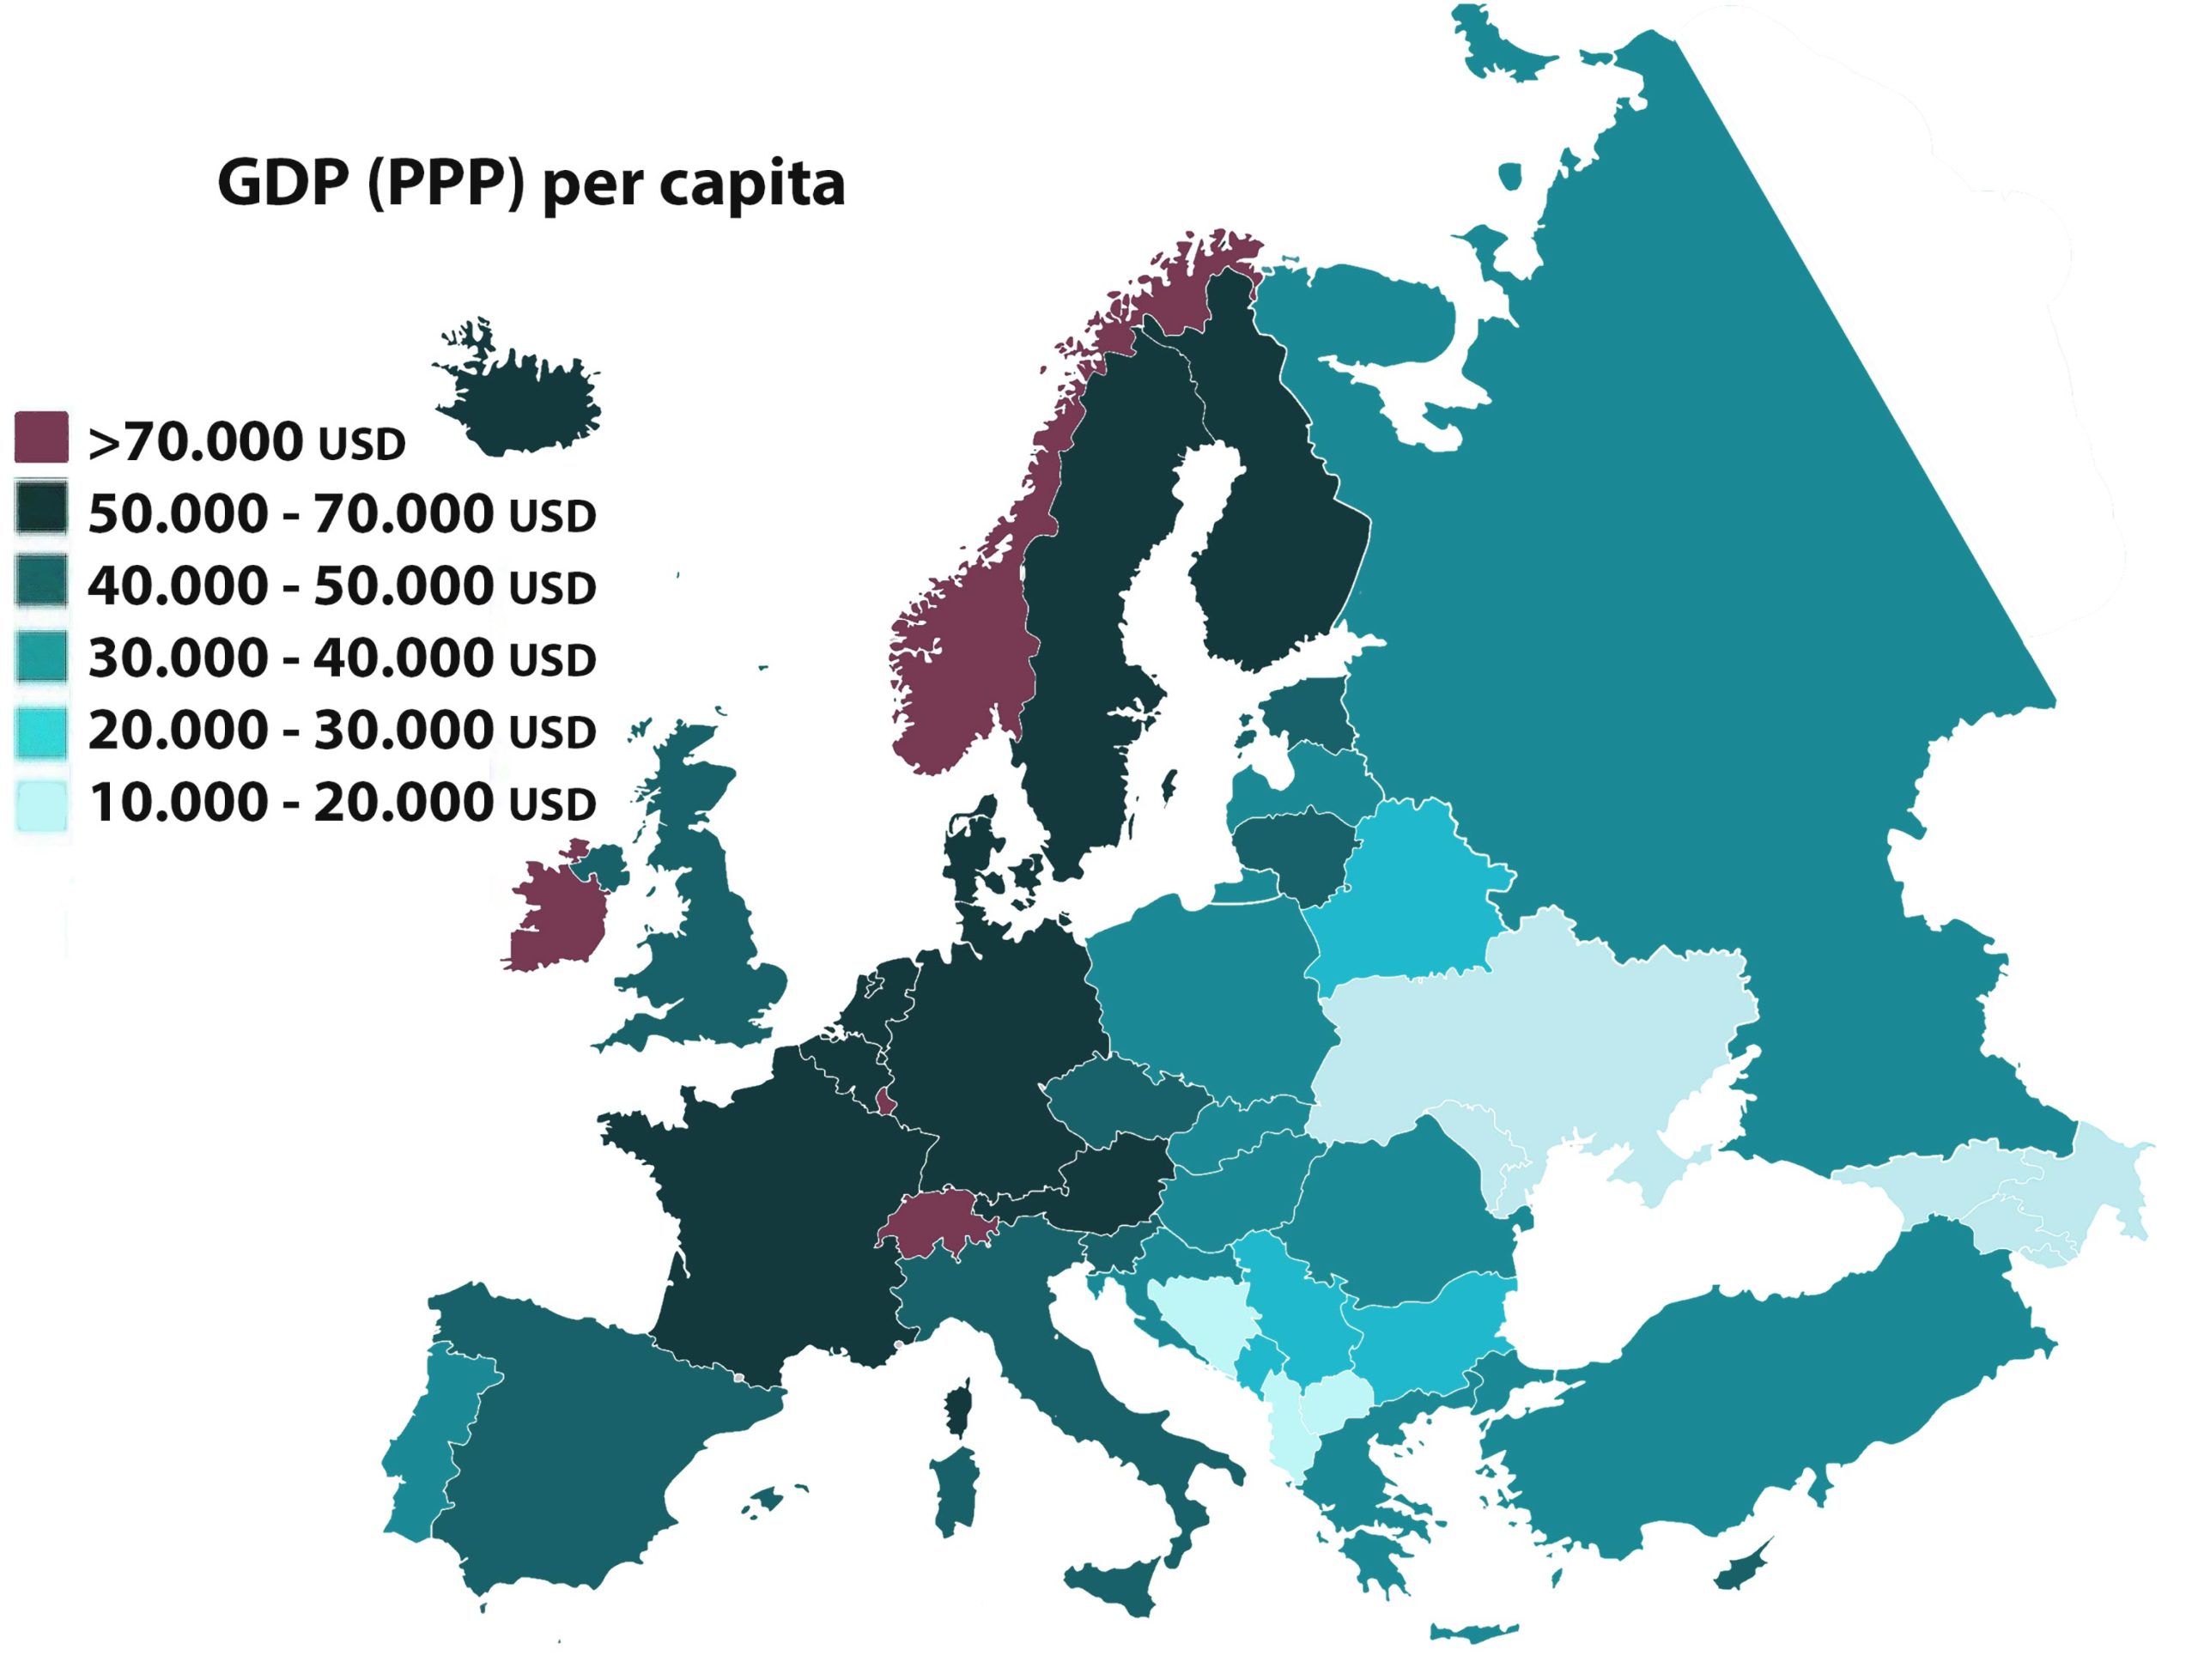 Spain GDP (PPP) Per Capita Map in Europe (2021)